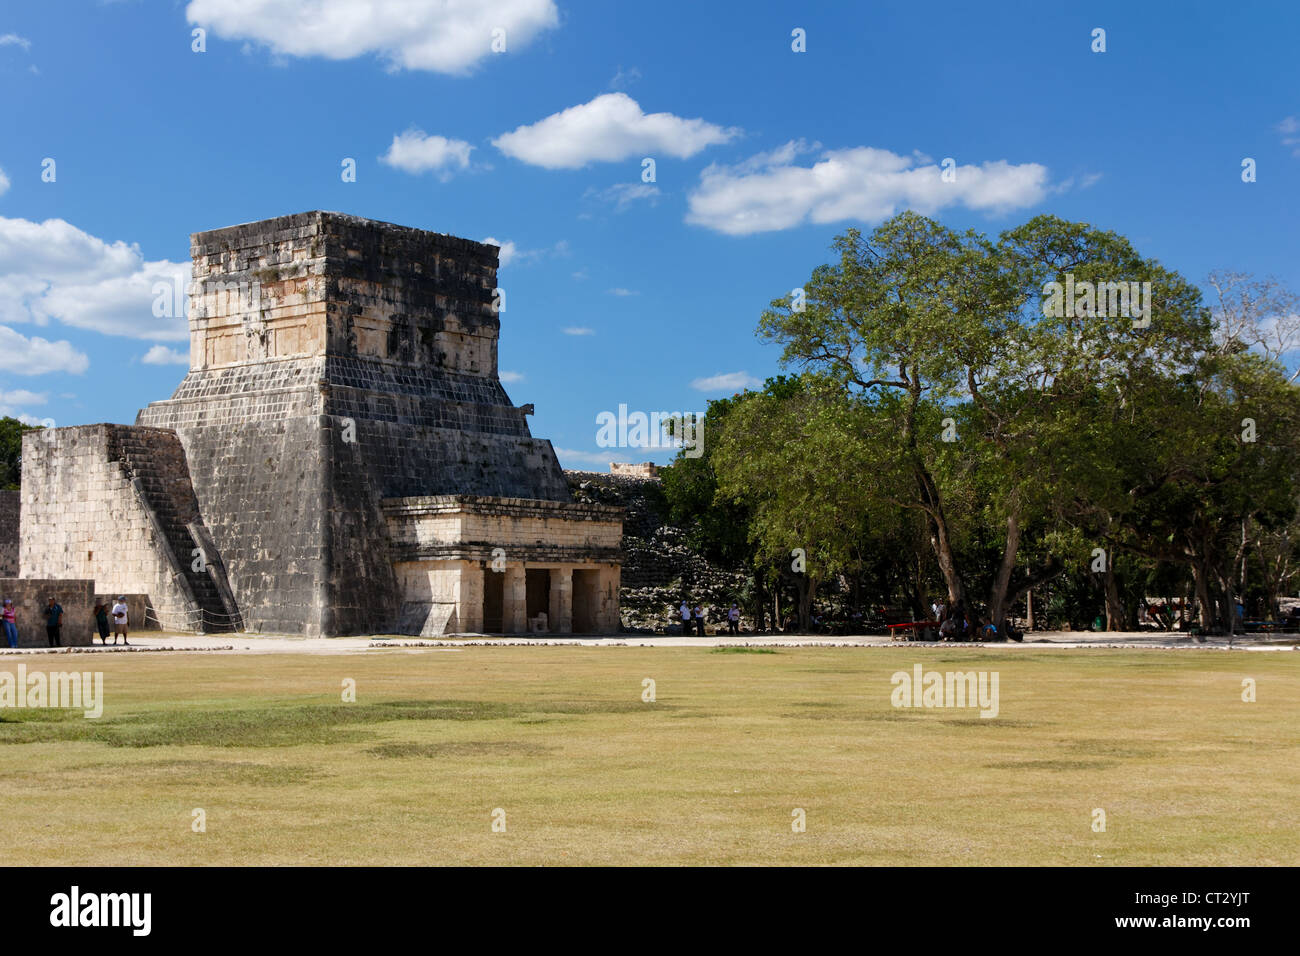 Ruins forming part of the Juego de Pelota (ball game) sports field among the Mayan ruins of Chichen Itza, Yucatan, Mexico. Stock Photo